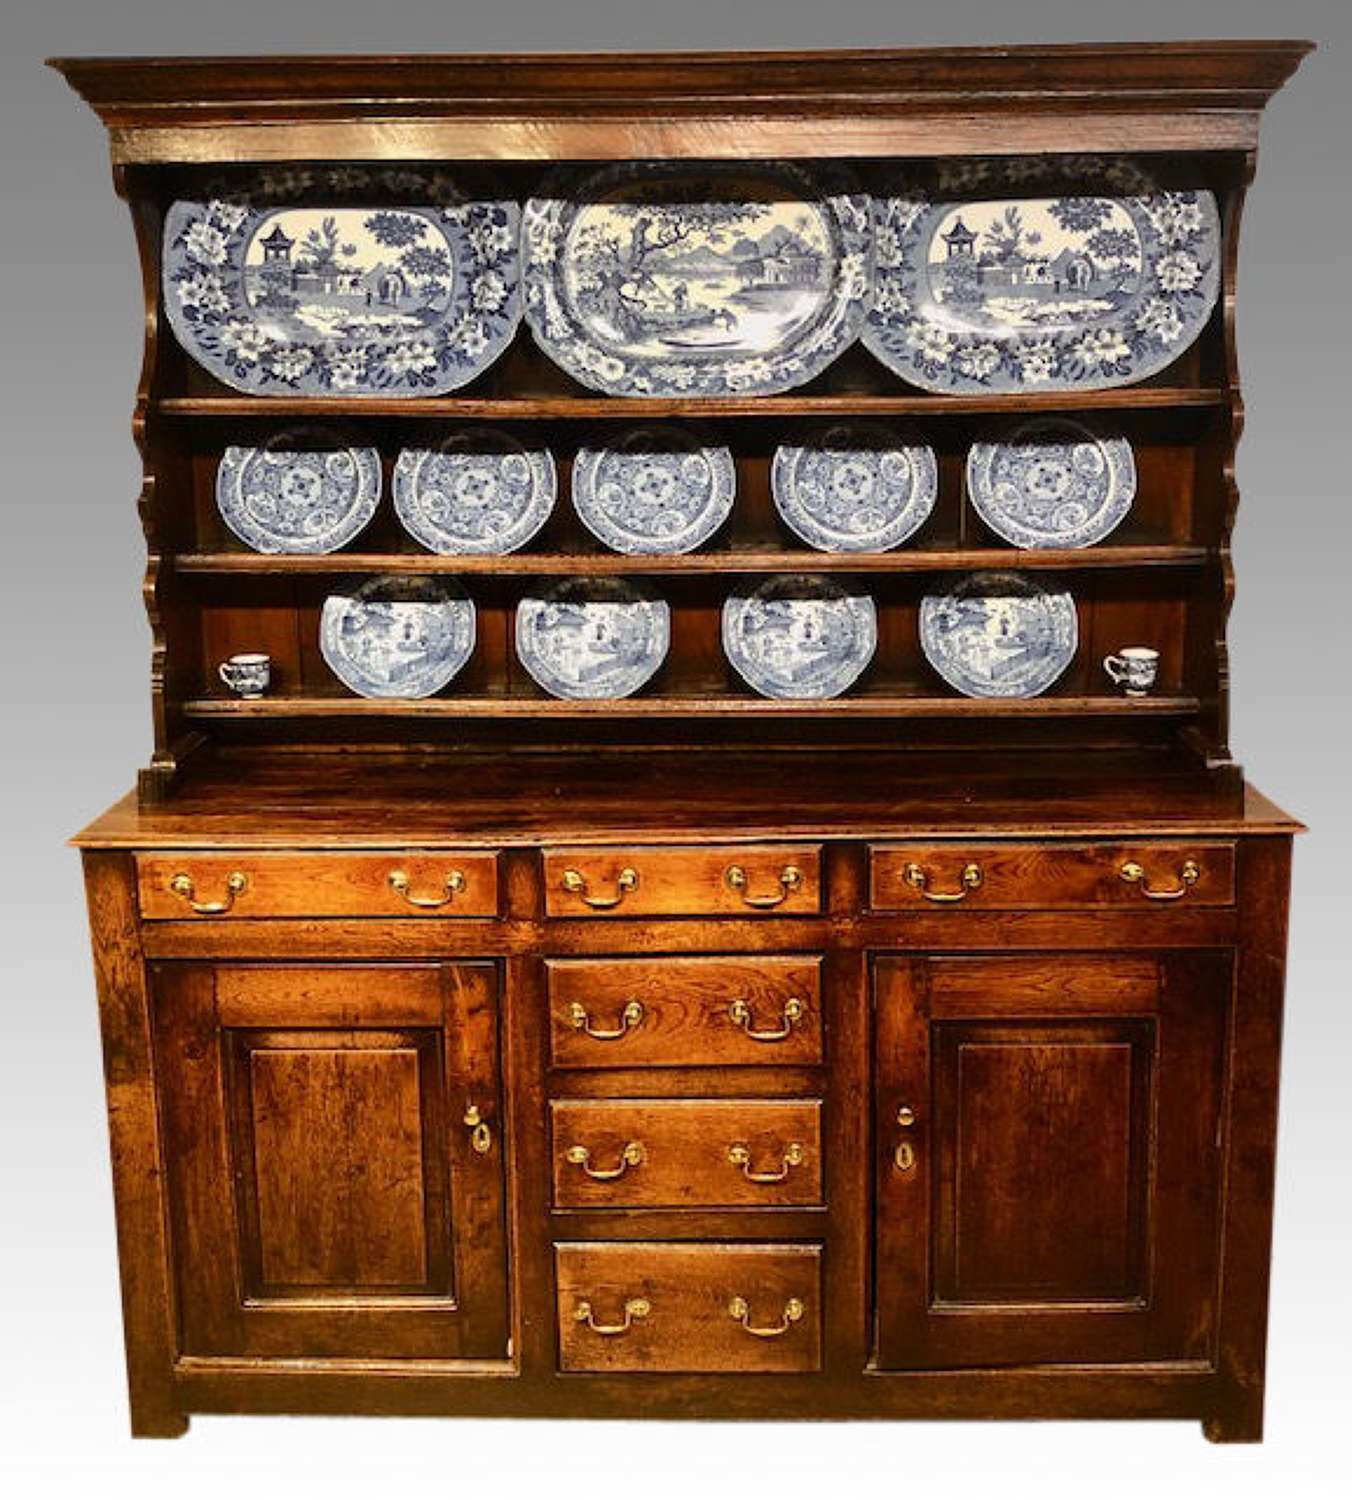 18th century Welsh oak dresser and shelves.